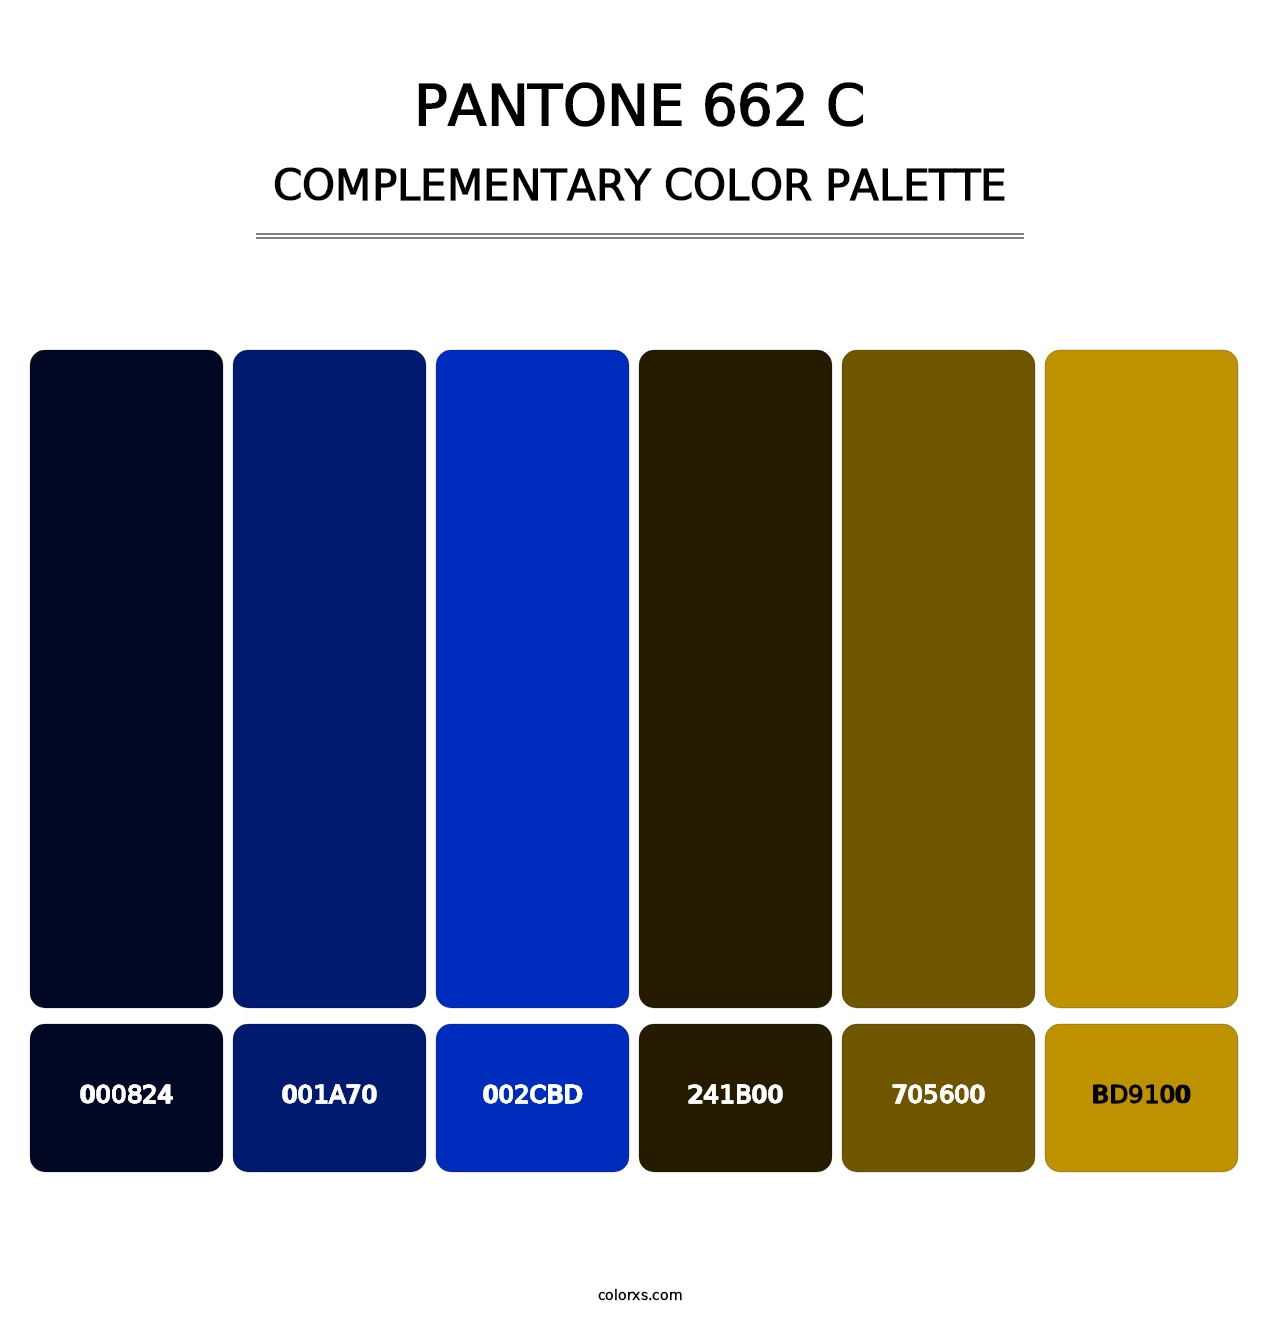 PANTONE 662 C - Complementary Color Palette